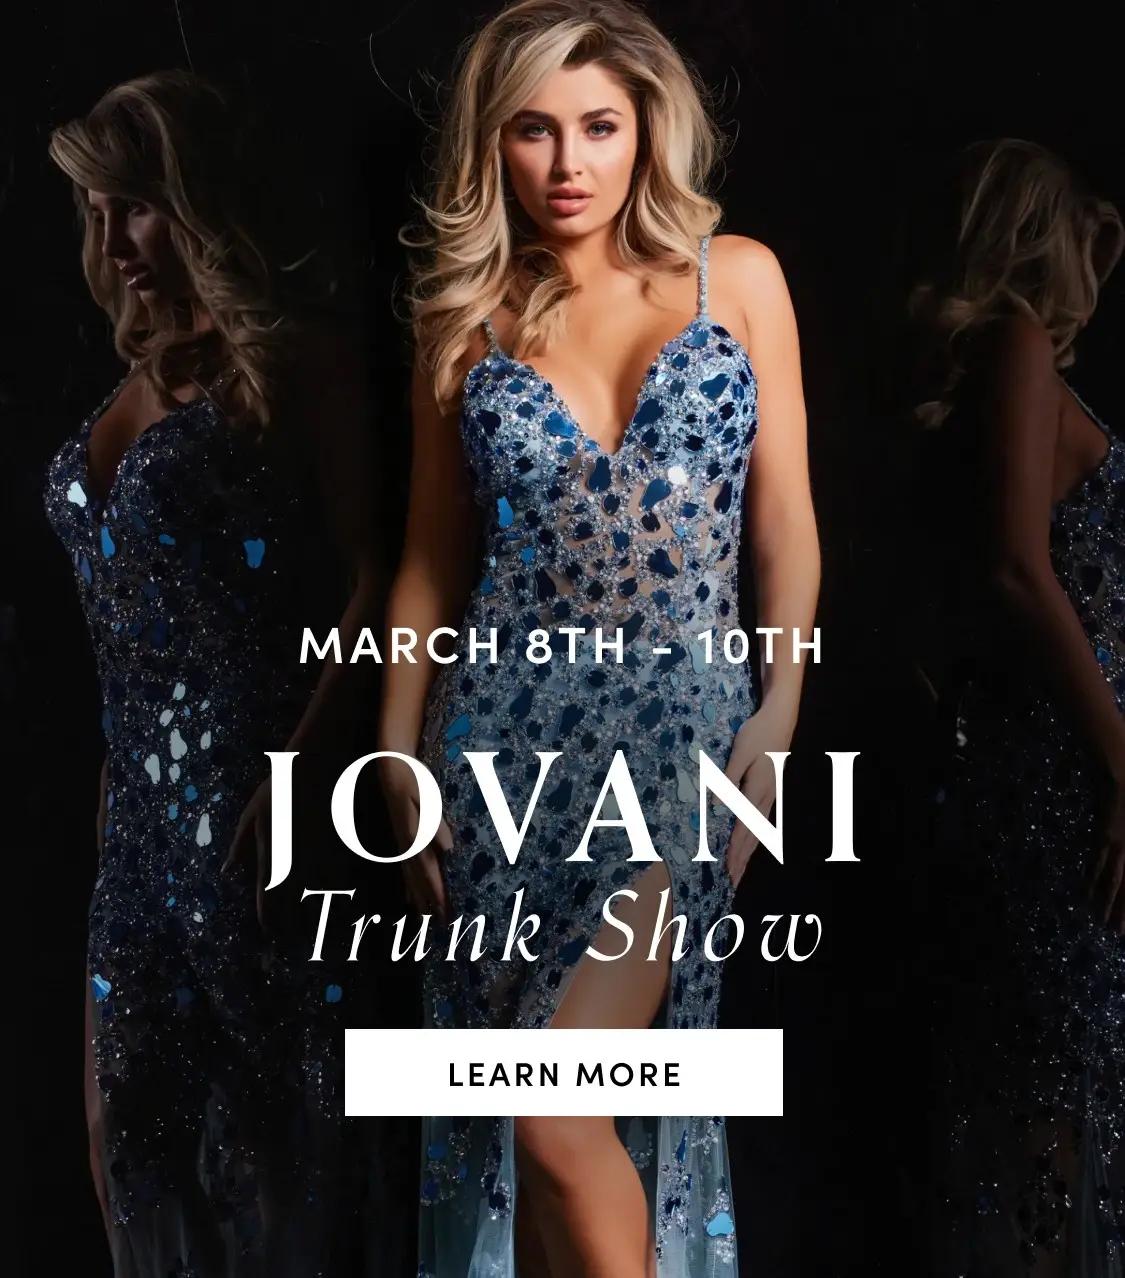 jovani trunk show